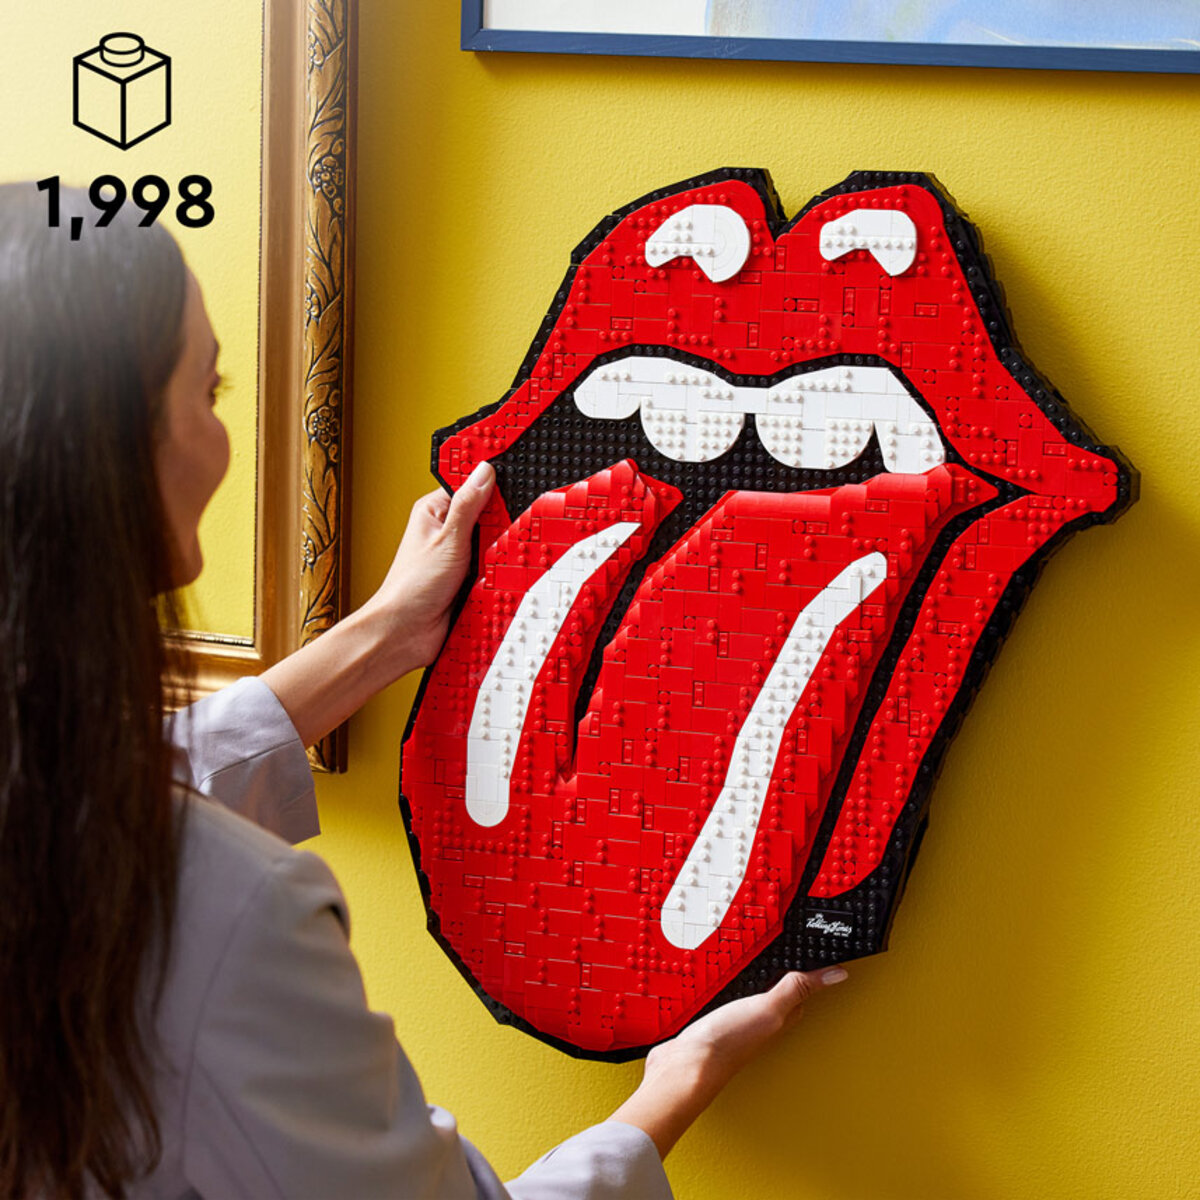 Buy LEGO ART The Rolling Stones Lifestyle Image at Costco.co.uk